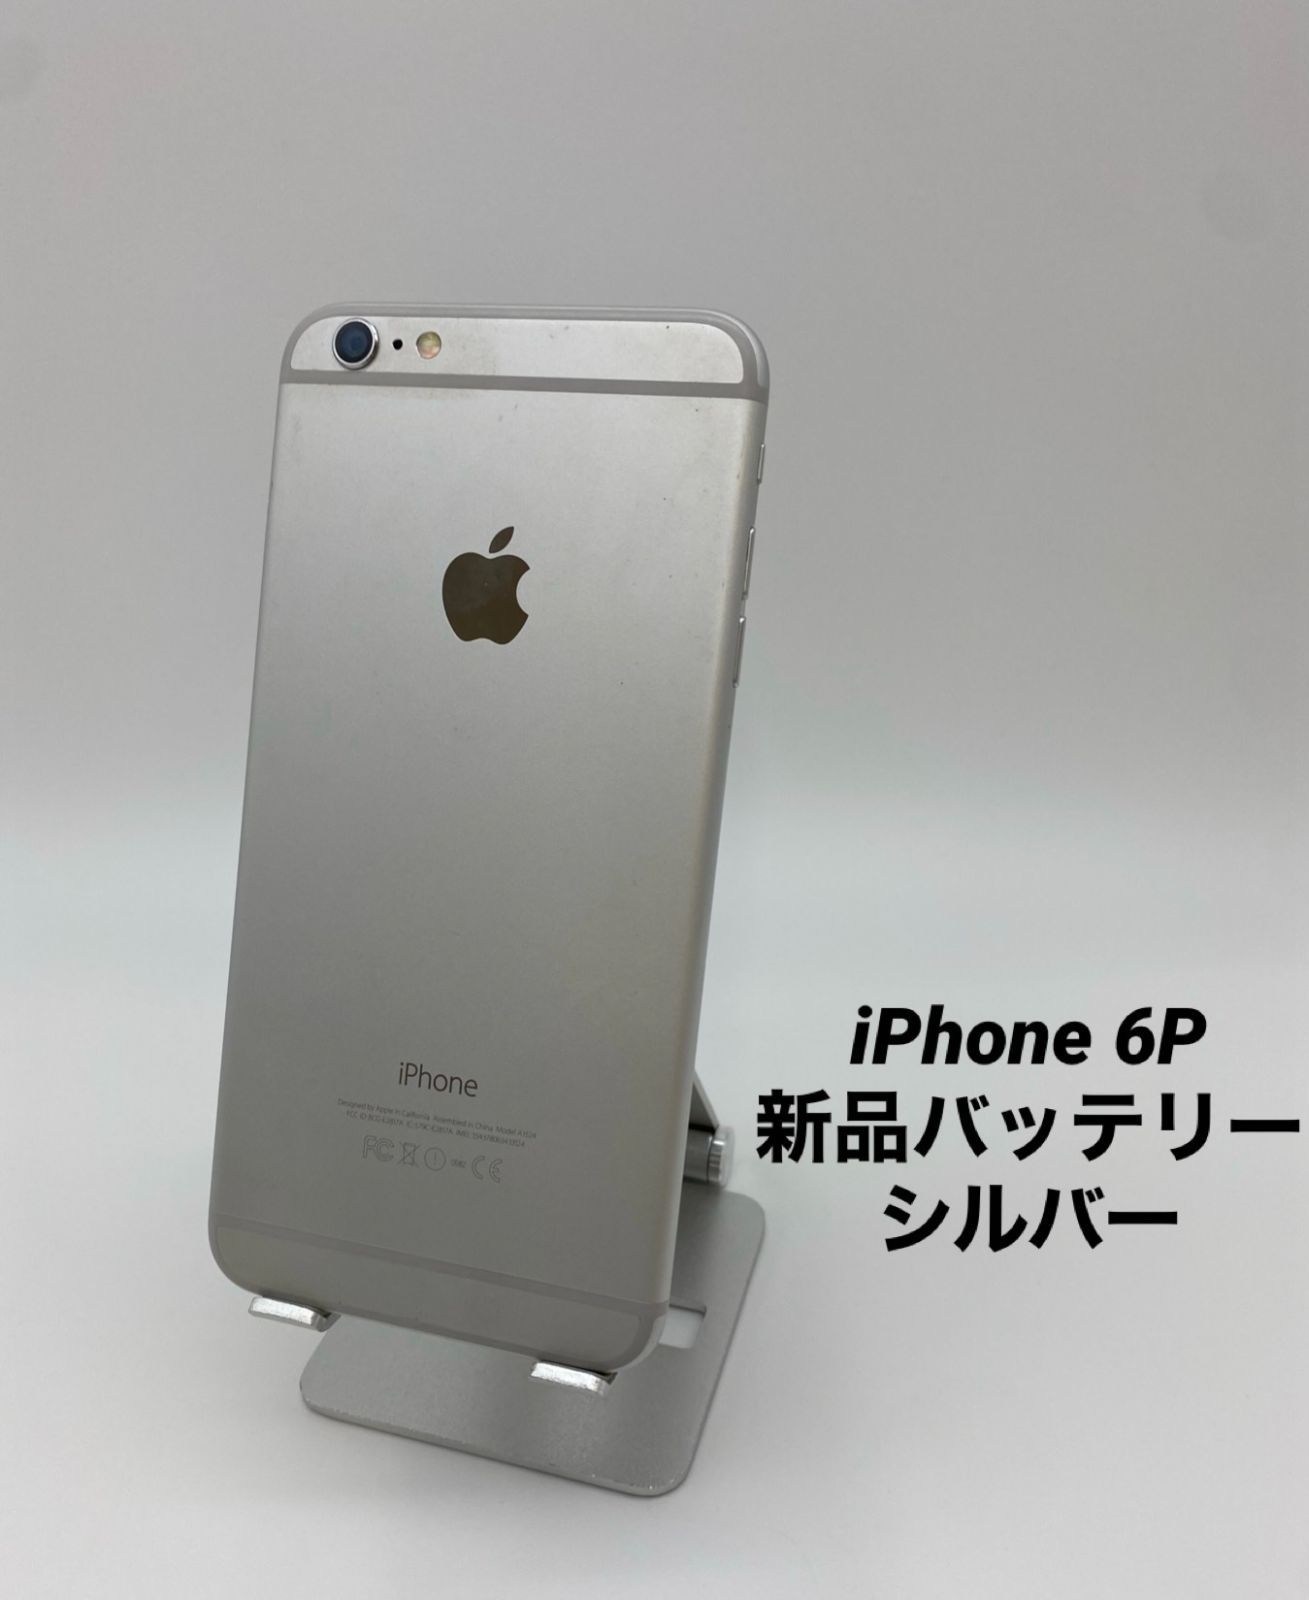 iPhone 6 Plus Silver 16 GB docomo - スマートフォン本体